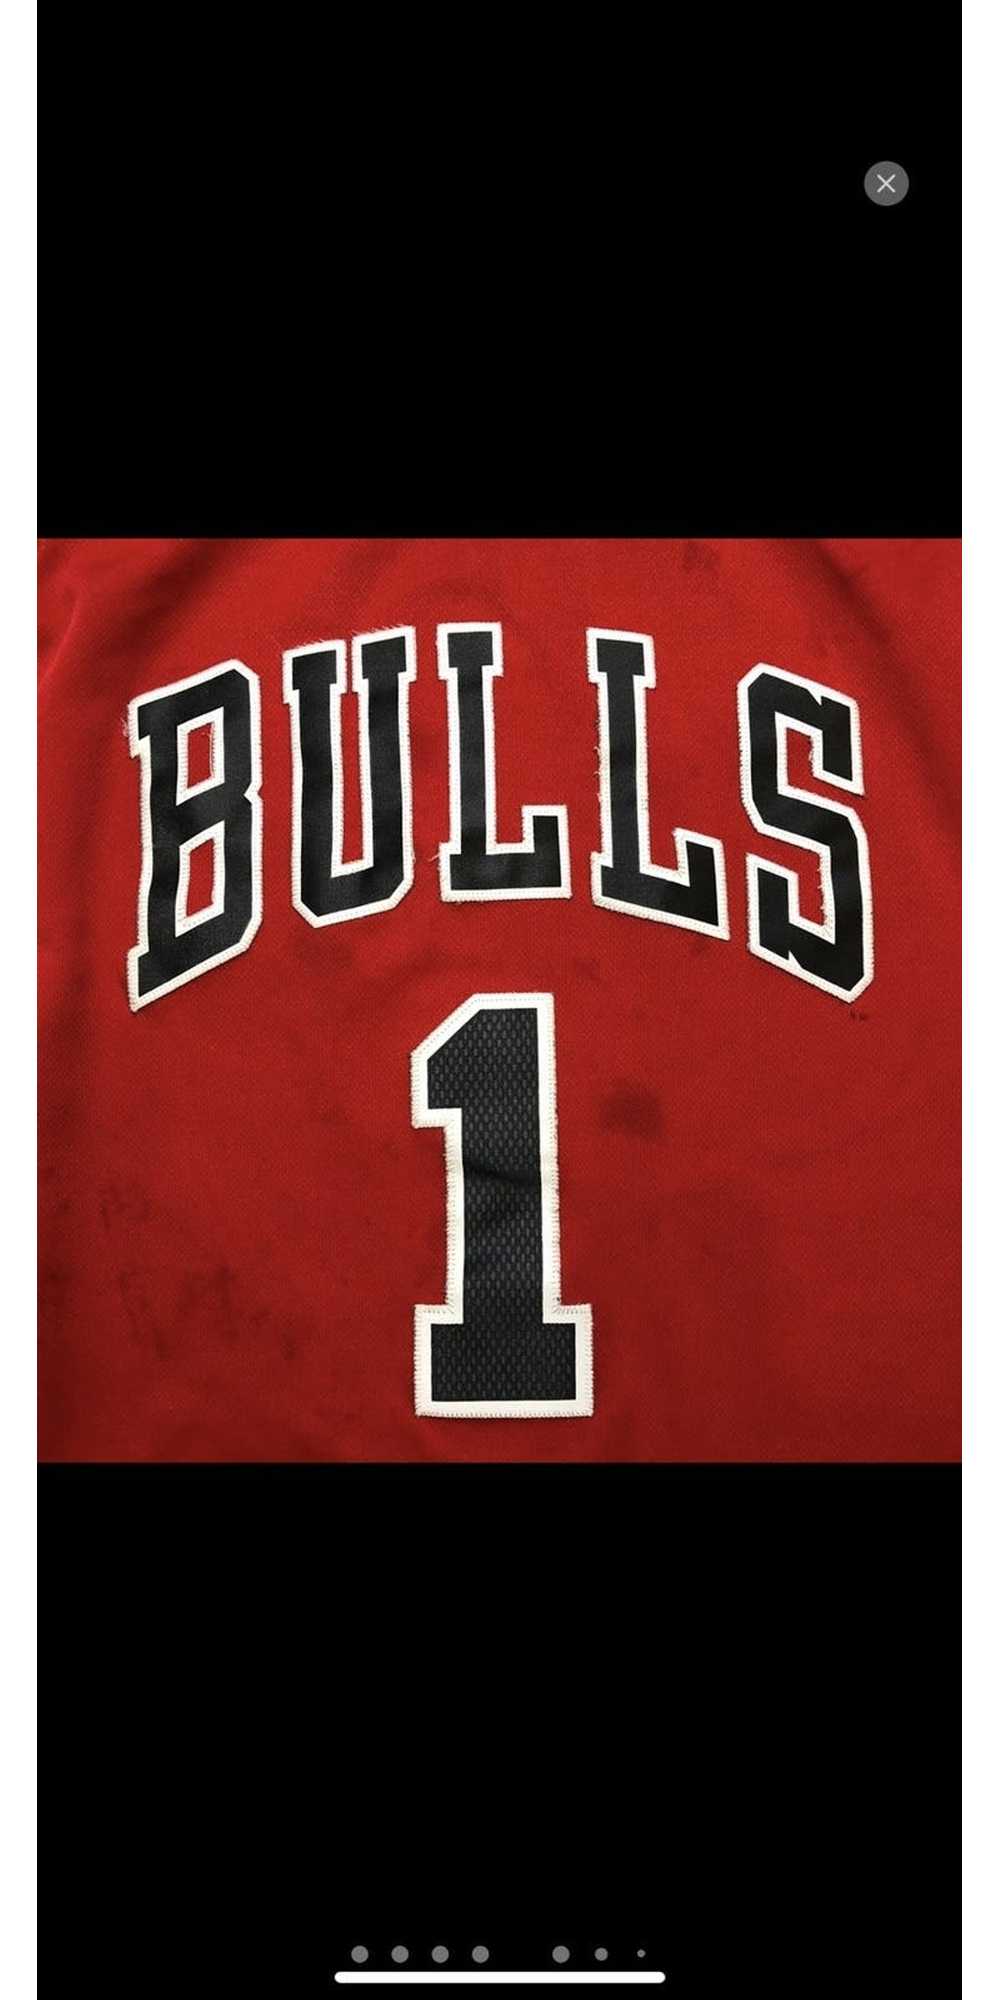 Chicago Bulls adidas Youth 2016 NBA Draft Snapback Hat – Chicago Sports Shop